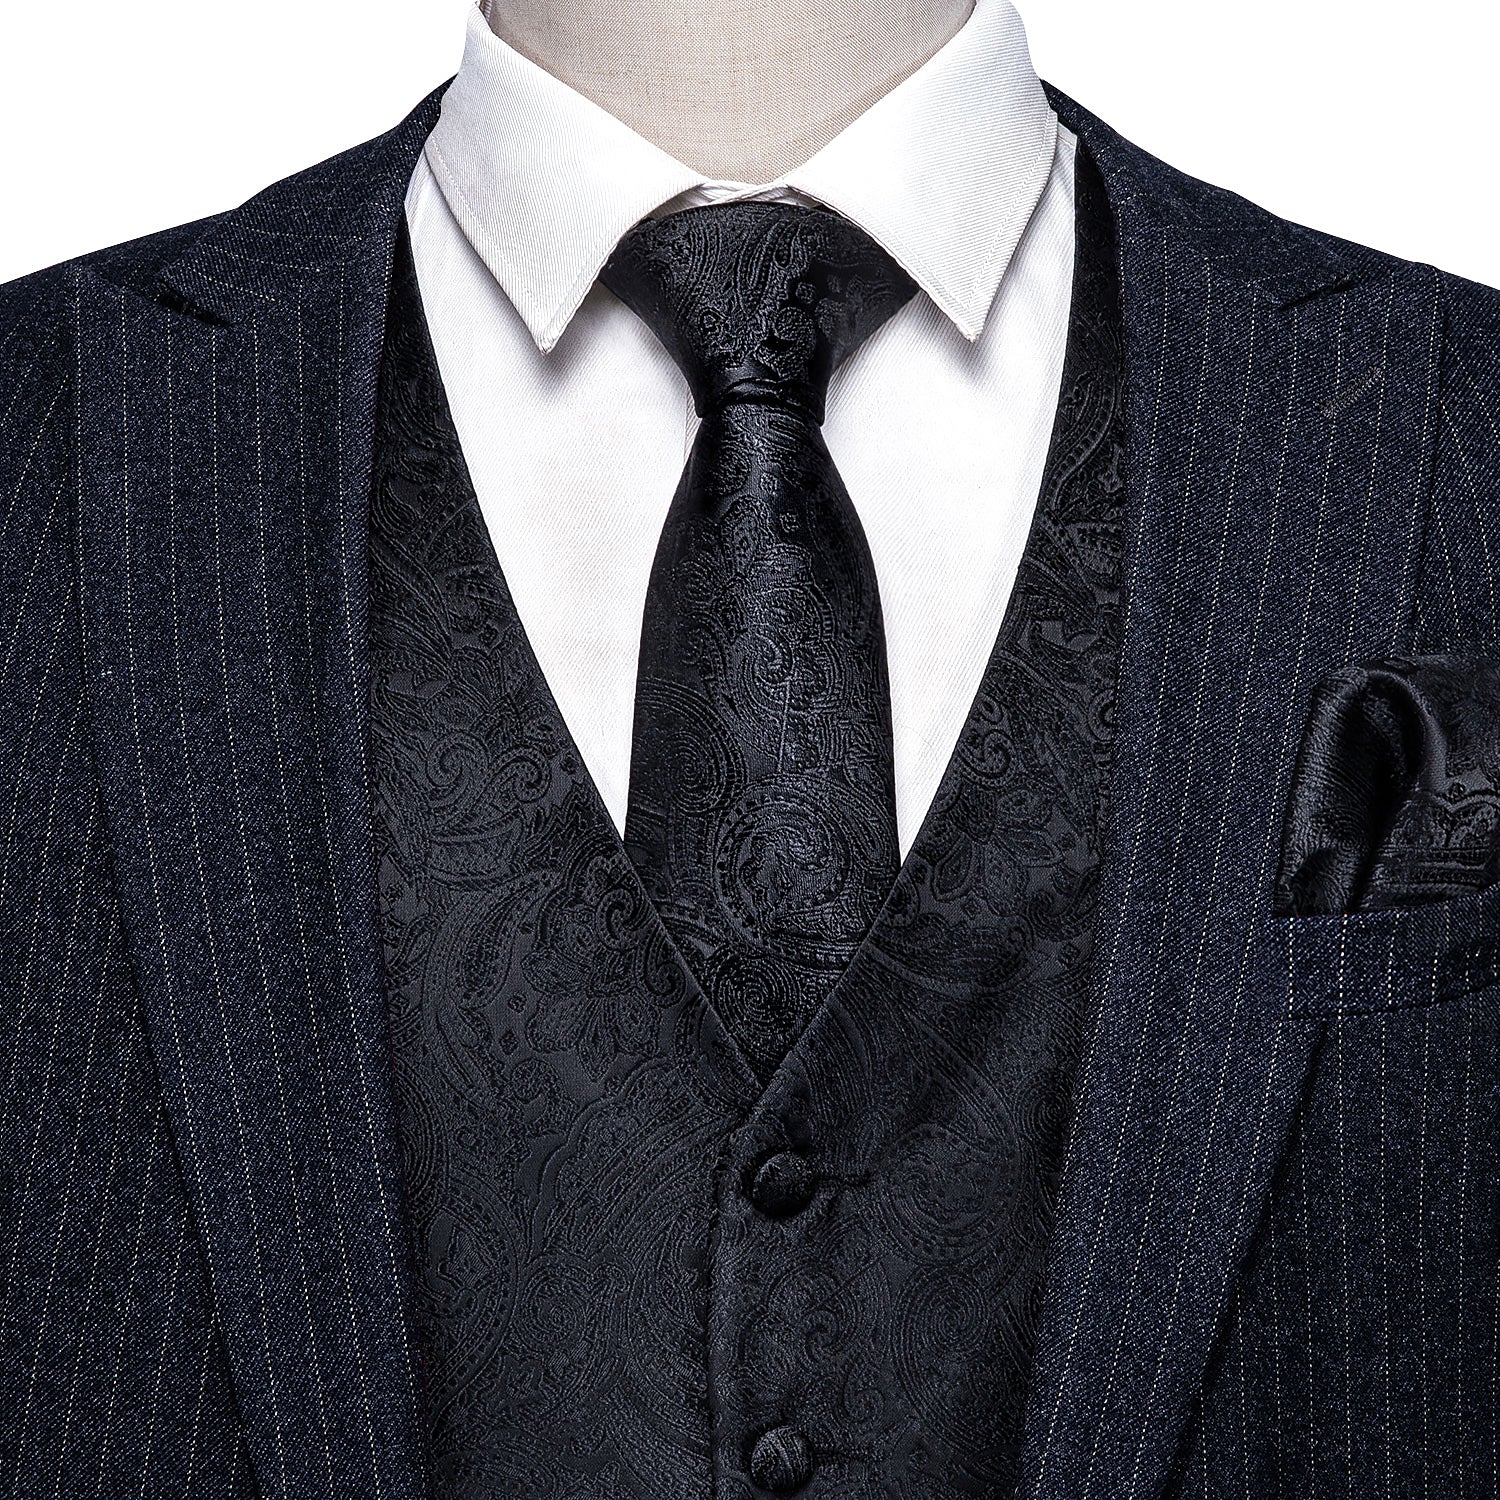 New Men's Black Paisley Silk Vest Necktie Pocket Square Cufflinks